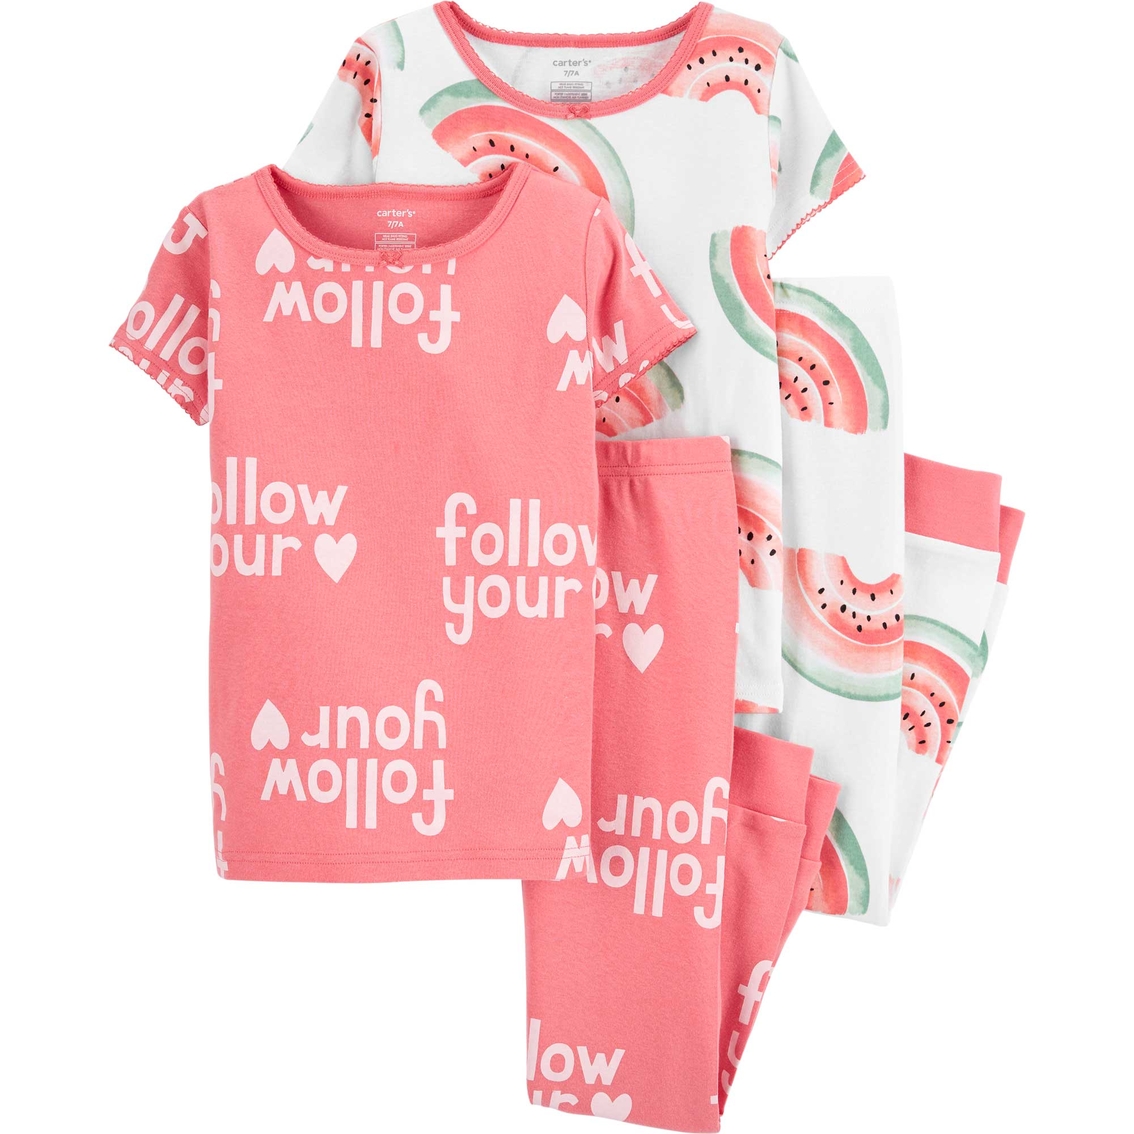 Carter's Little Girls Slogans and Watermelon 100% Snug Fit 4 pc. Cotton Pajamas